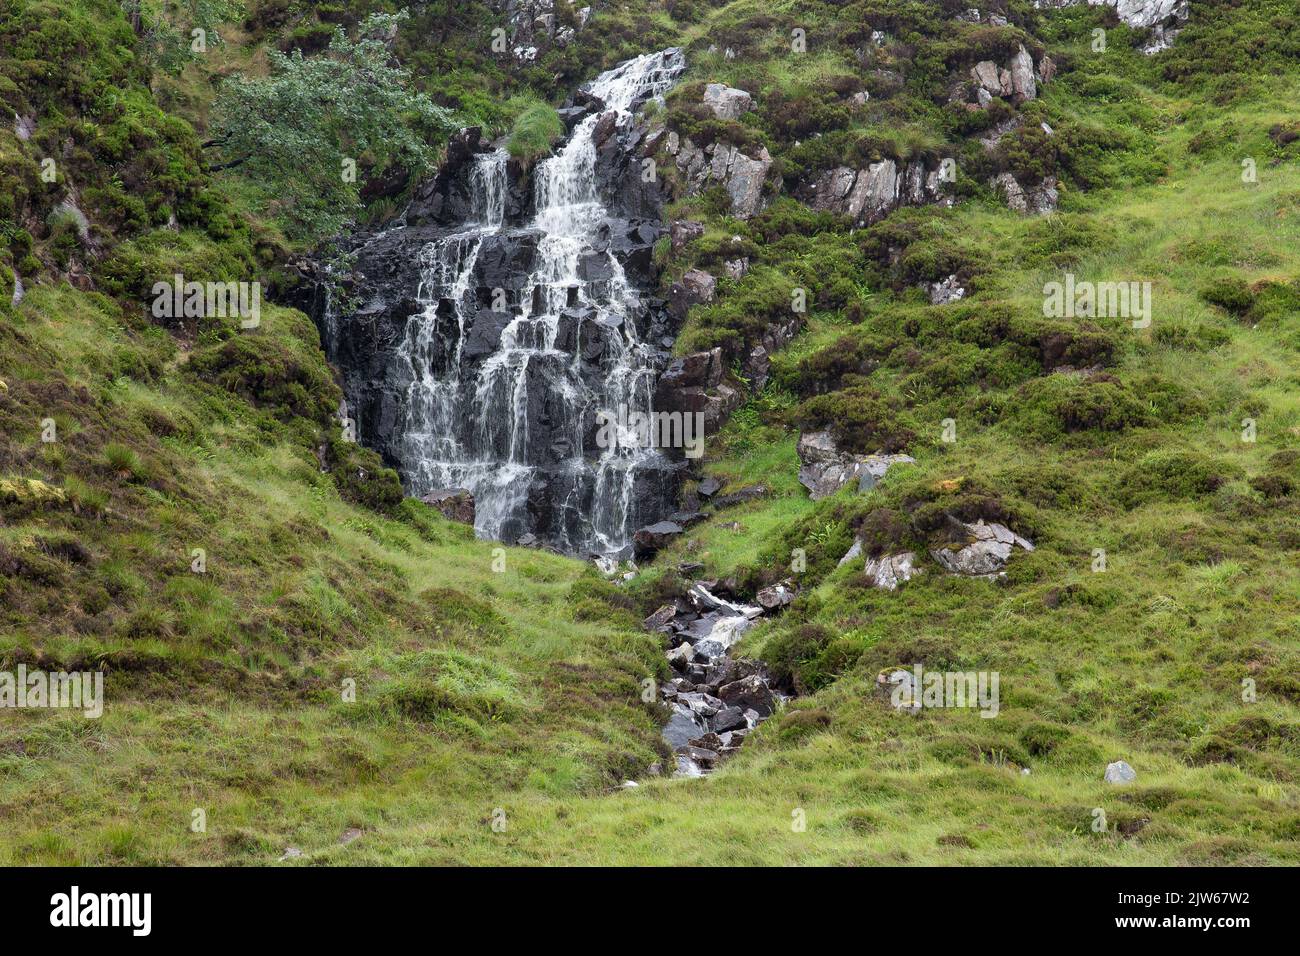 Waterfall, Glen Valtos, Uig, Lewis, Isle of Lewis, Hebrides, Outer Hebrides, Western Isles, Scotland, United Kingdom, Great Britain Stock Photo